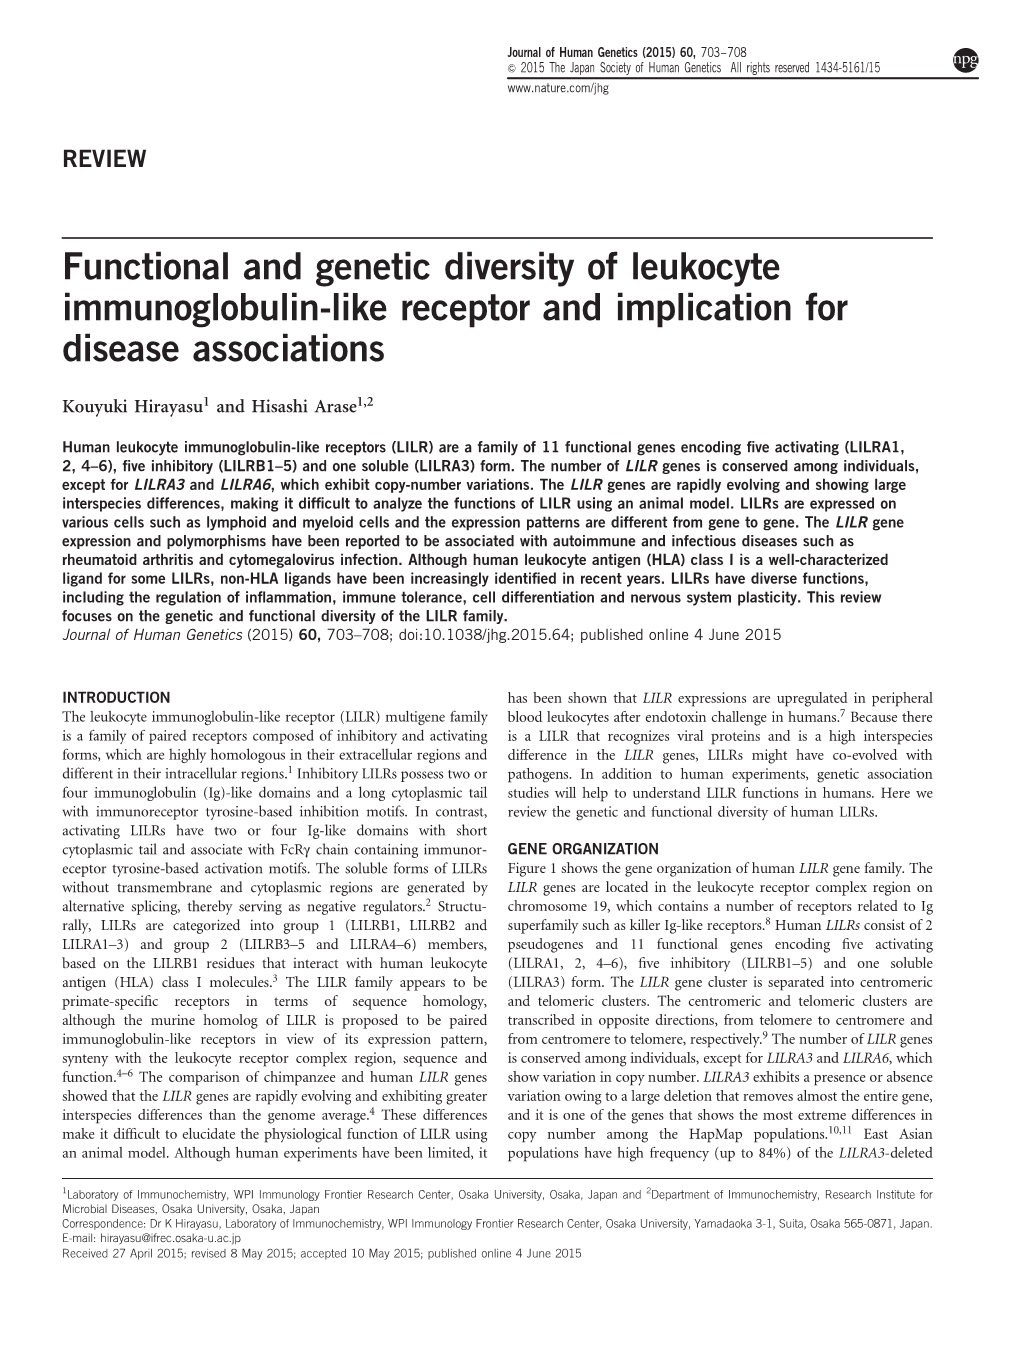 Functional and Genetic Diversity of Leukocyte Immunoglobulin-Like Receptor and Implication for Disease Associations